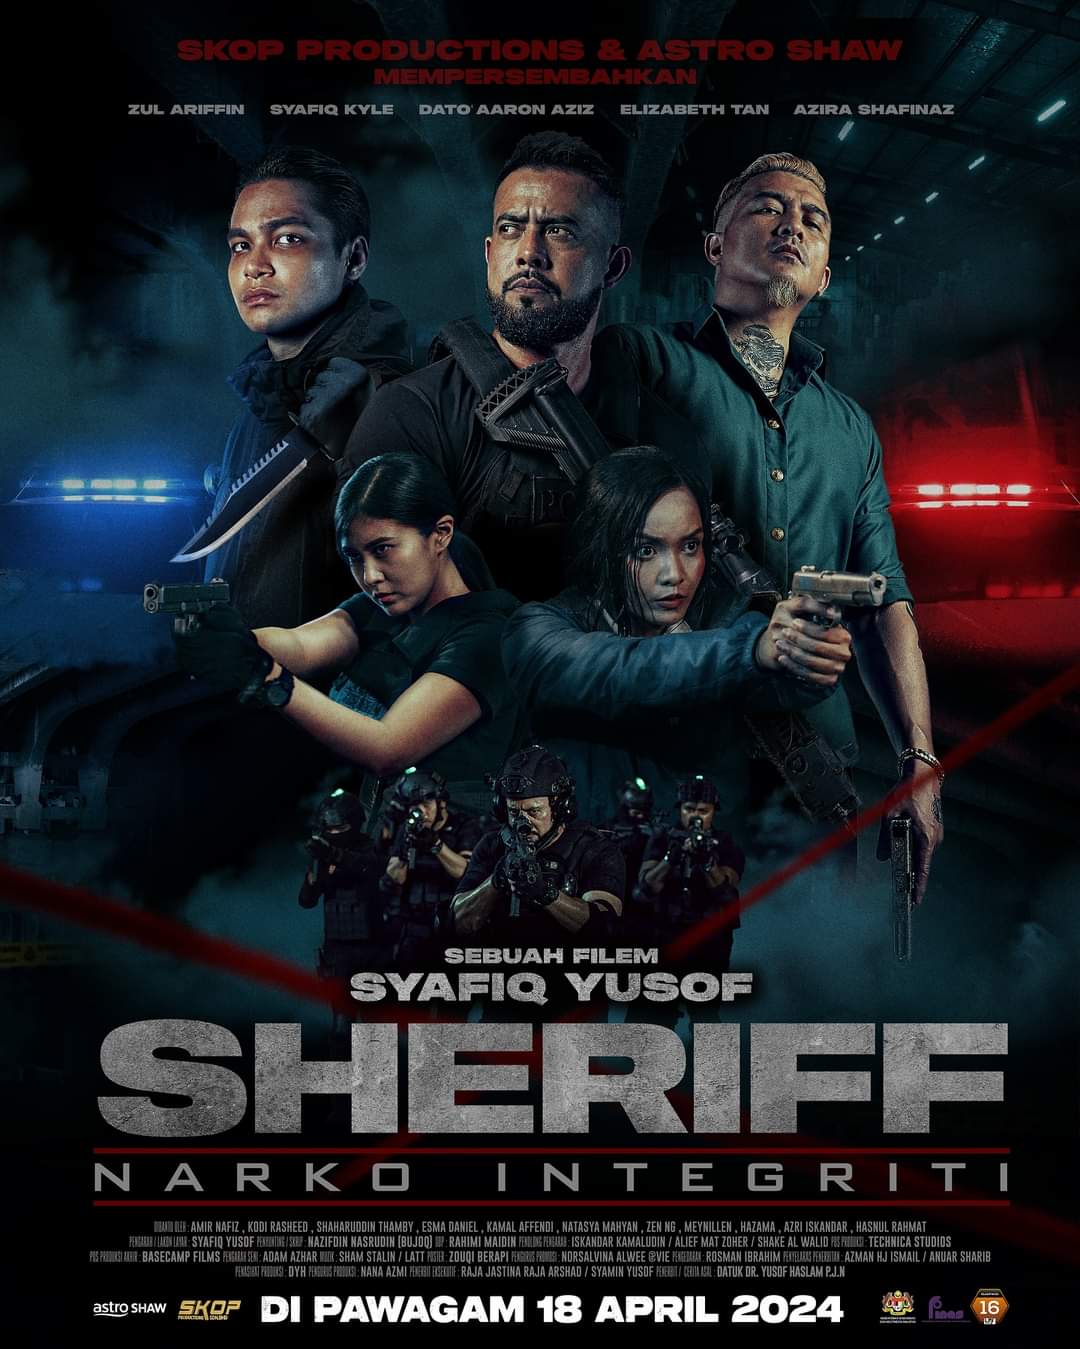 Sheriff Narko Integriti